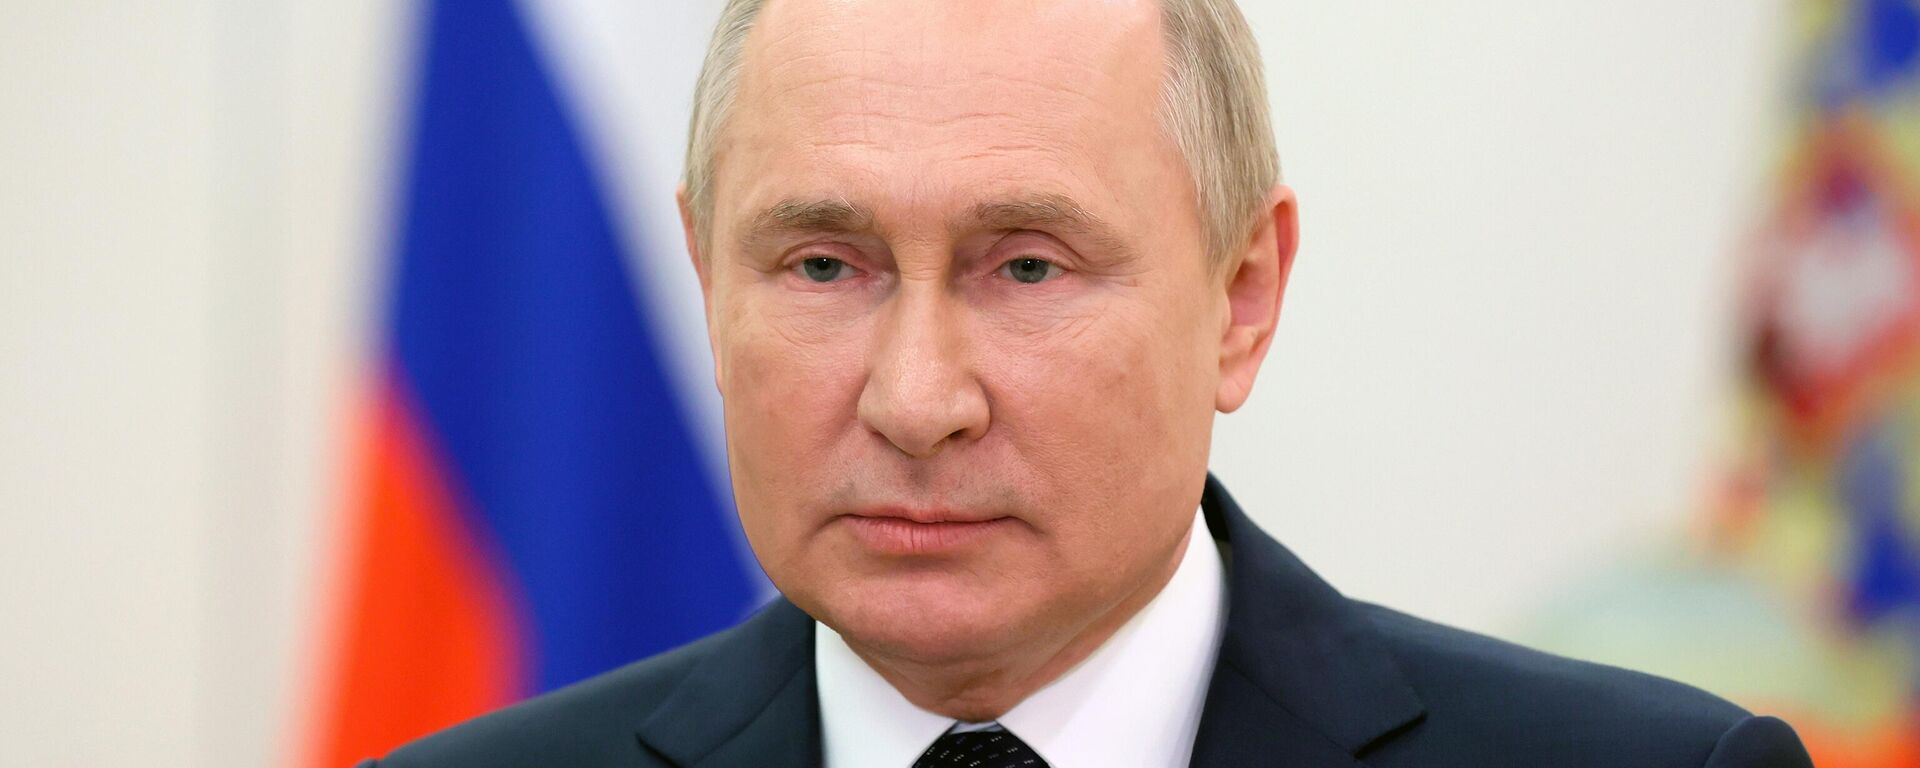 Vladímir Putin, presidente de Rusia - Sputnik Mundo, 1920, 13.11.2021